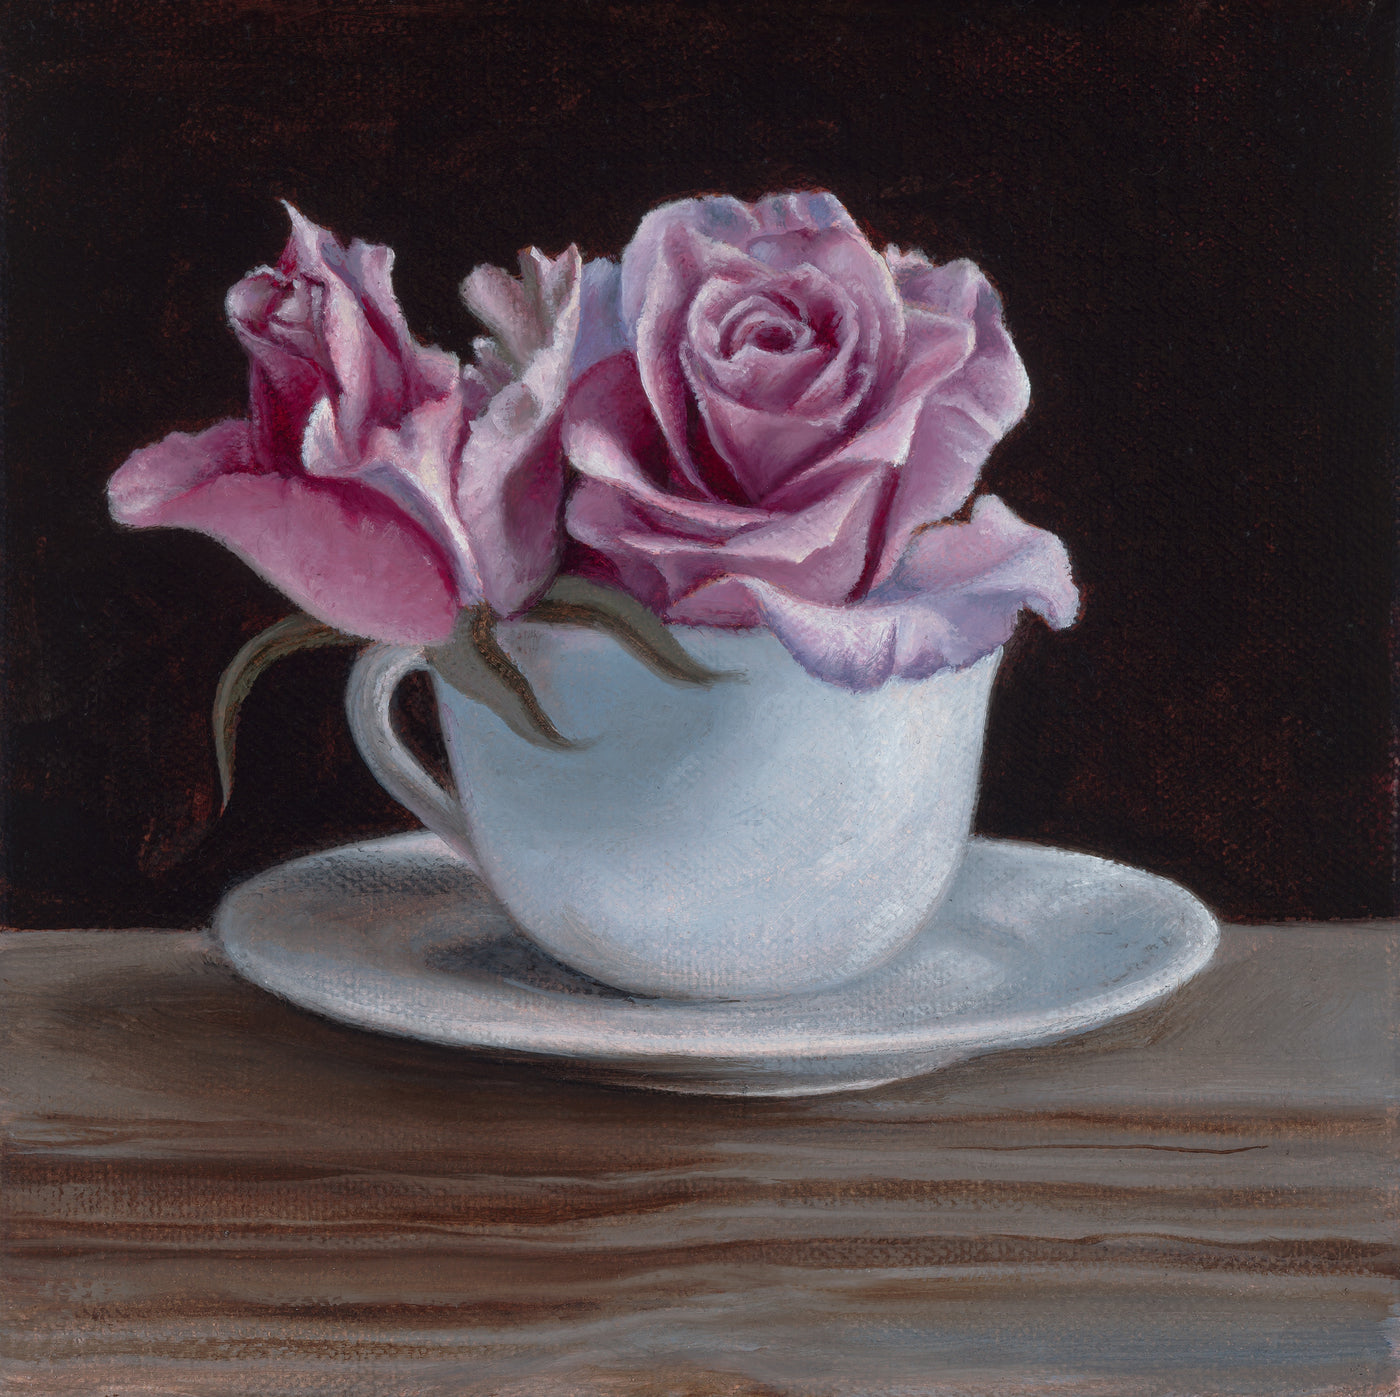 Marnie White - Purple Roses & Teacup